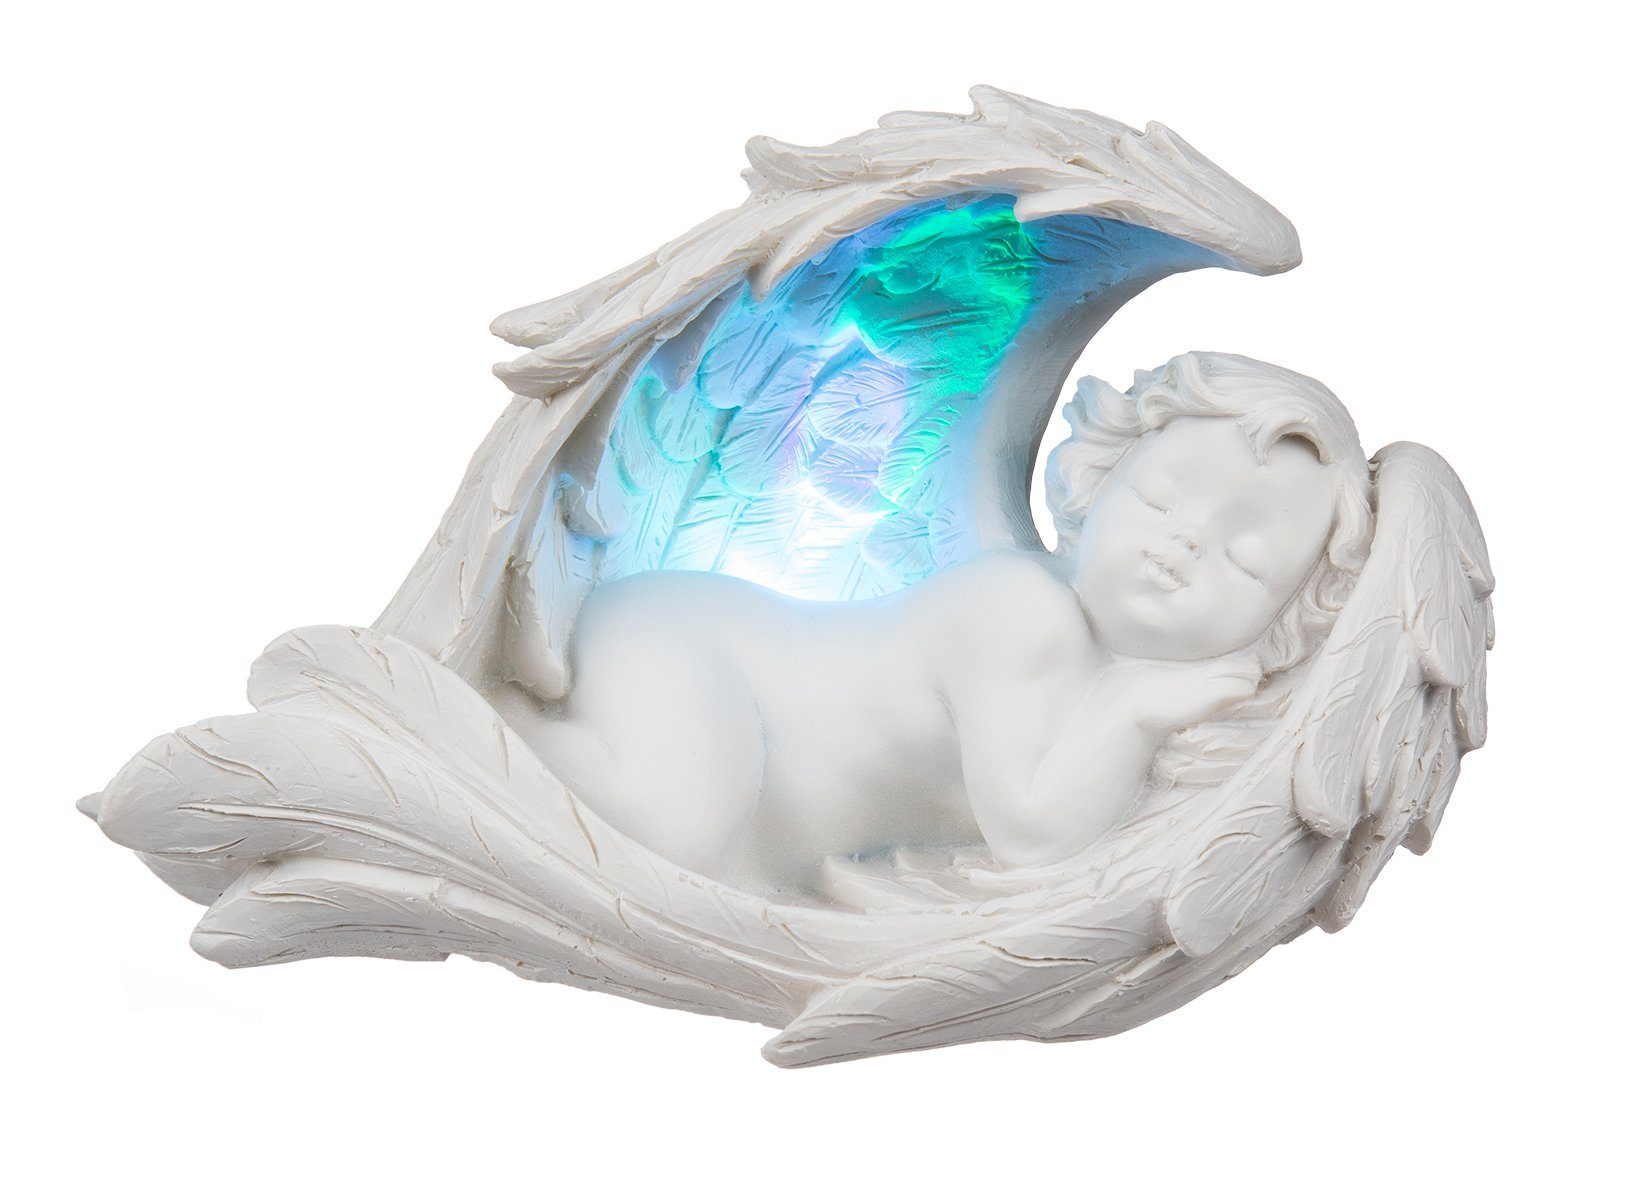 Stehlampe Farbwechselfunktion Flügel the of Blue Schlafender Leuchte LED Out mit Engel